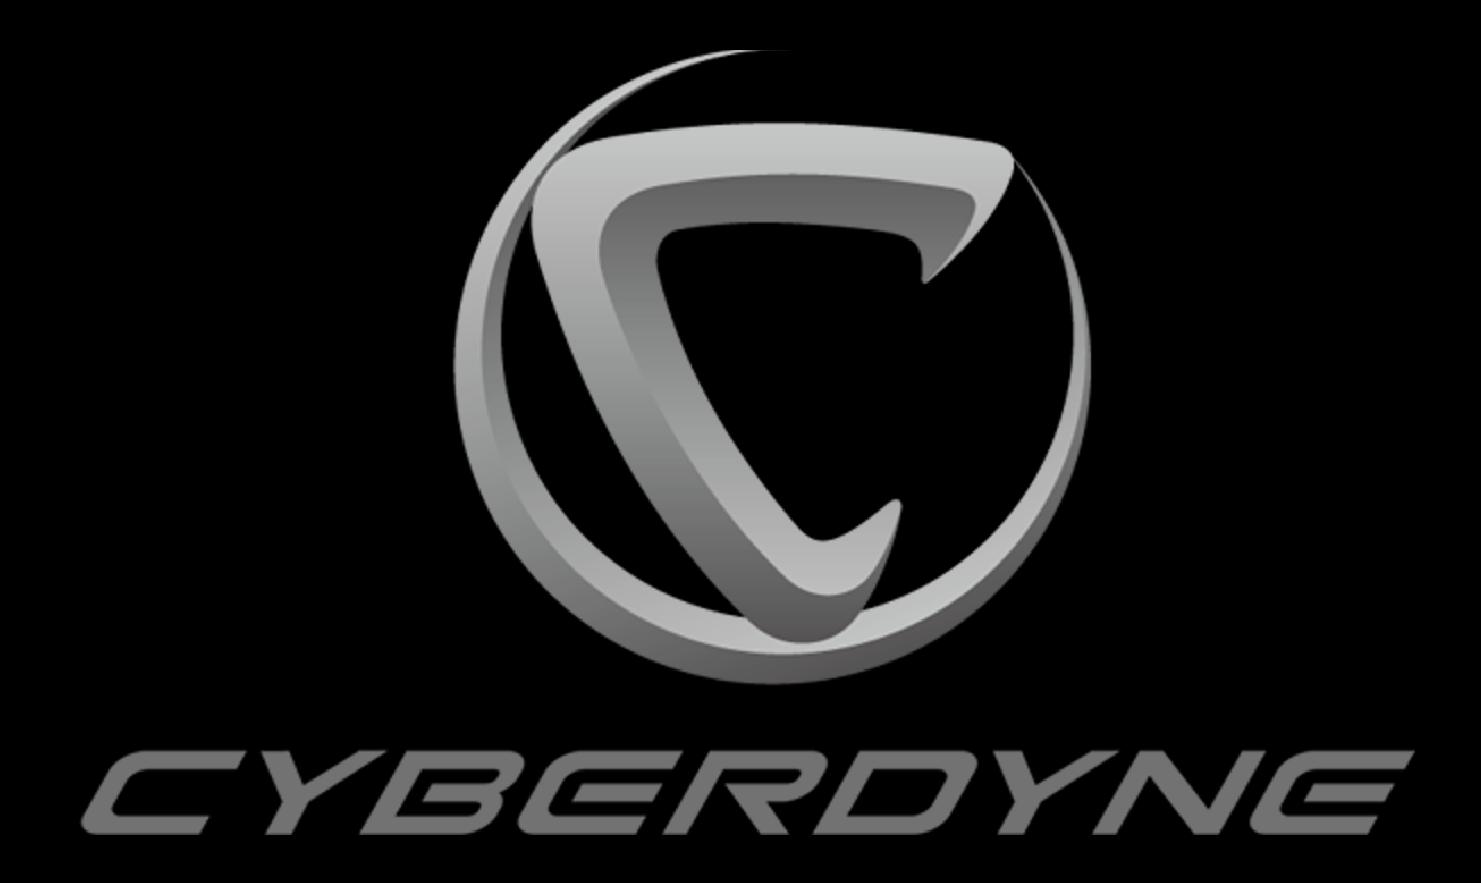 Cyberdyne_logo